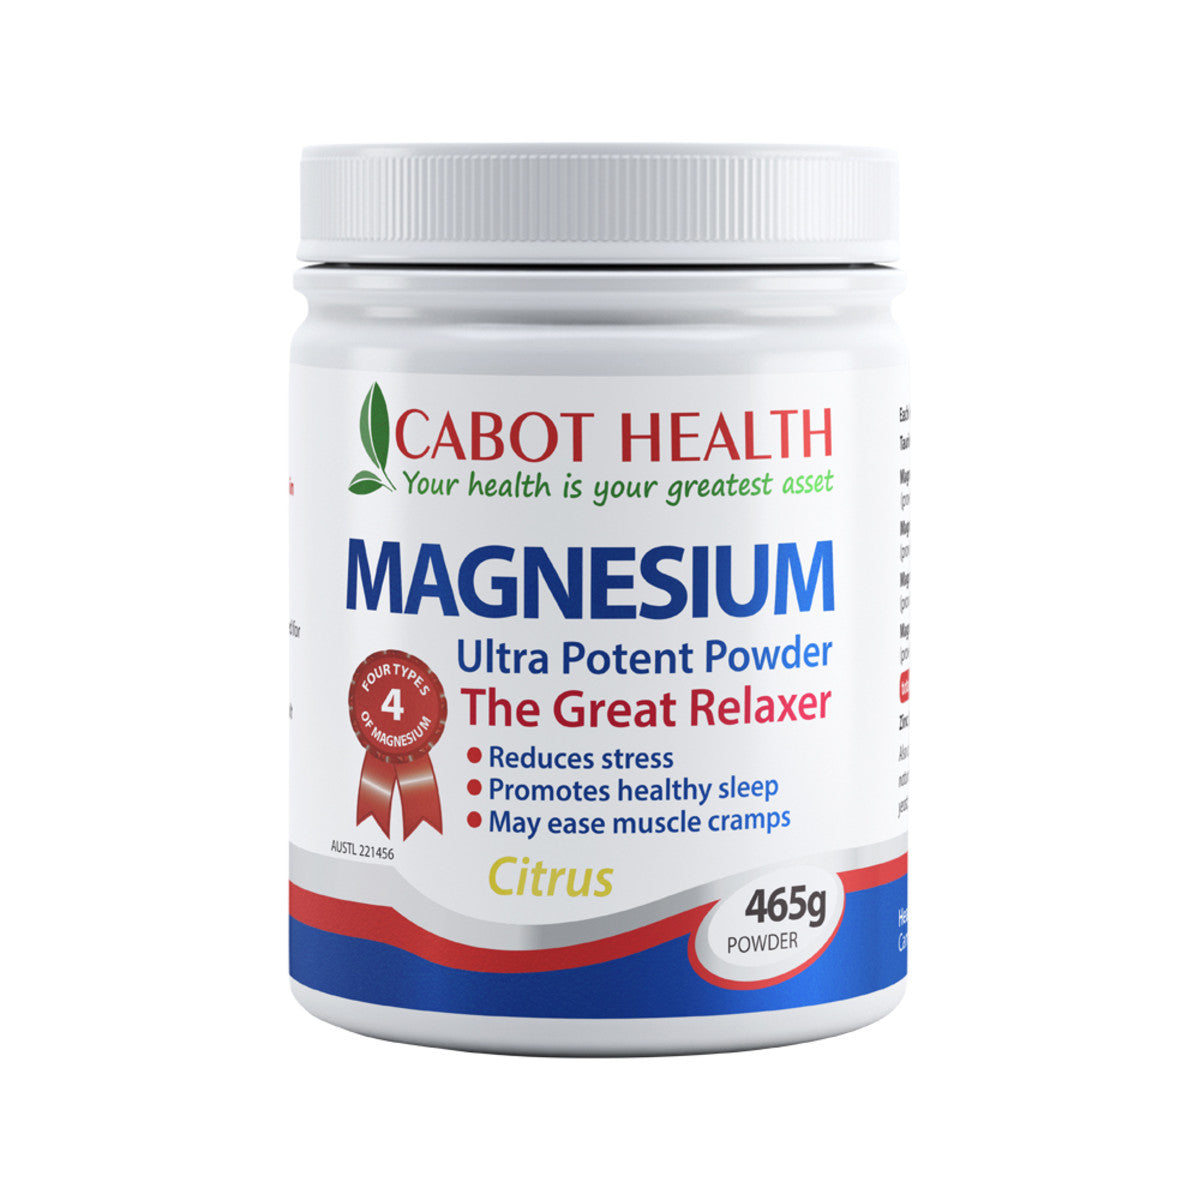 Cabot Health - Magnesium Ultra Potent Powder (Citrus)